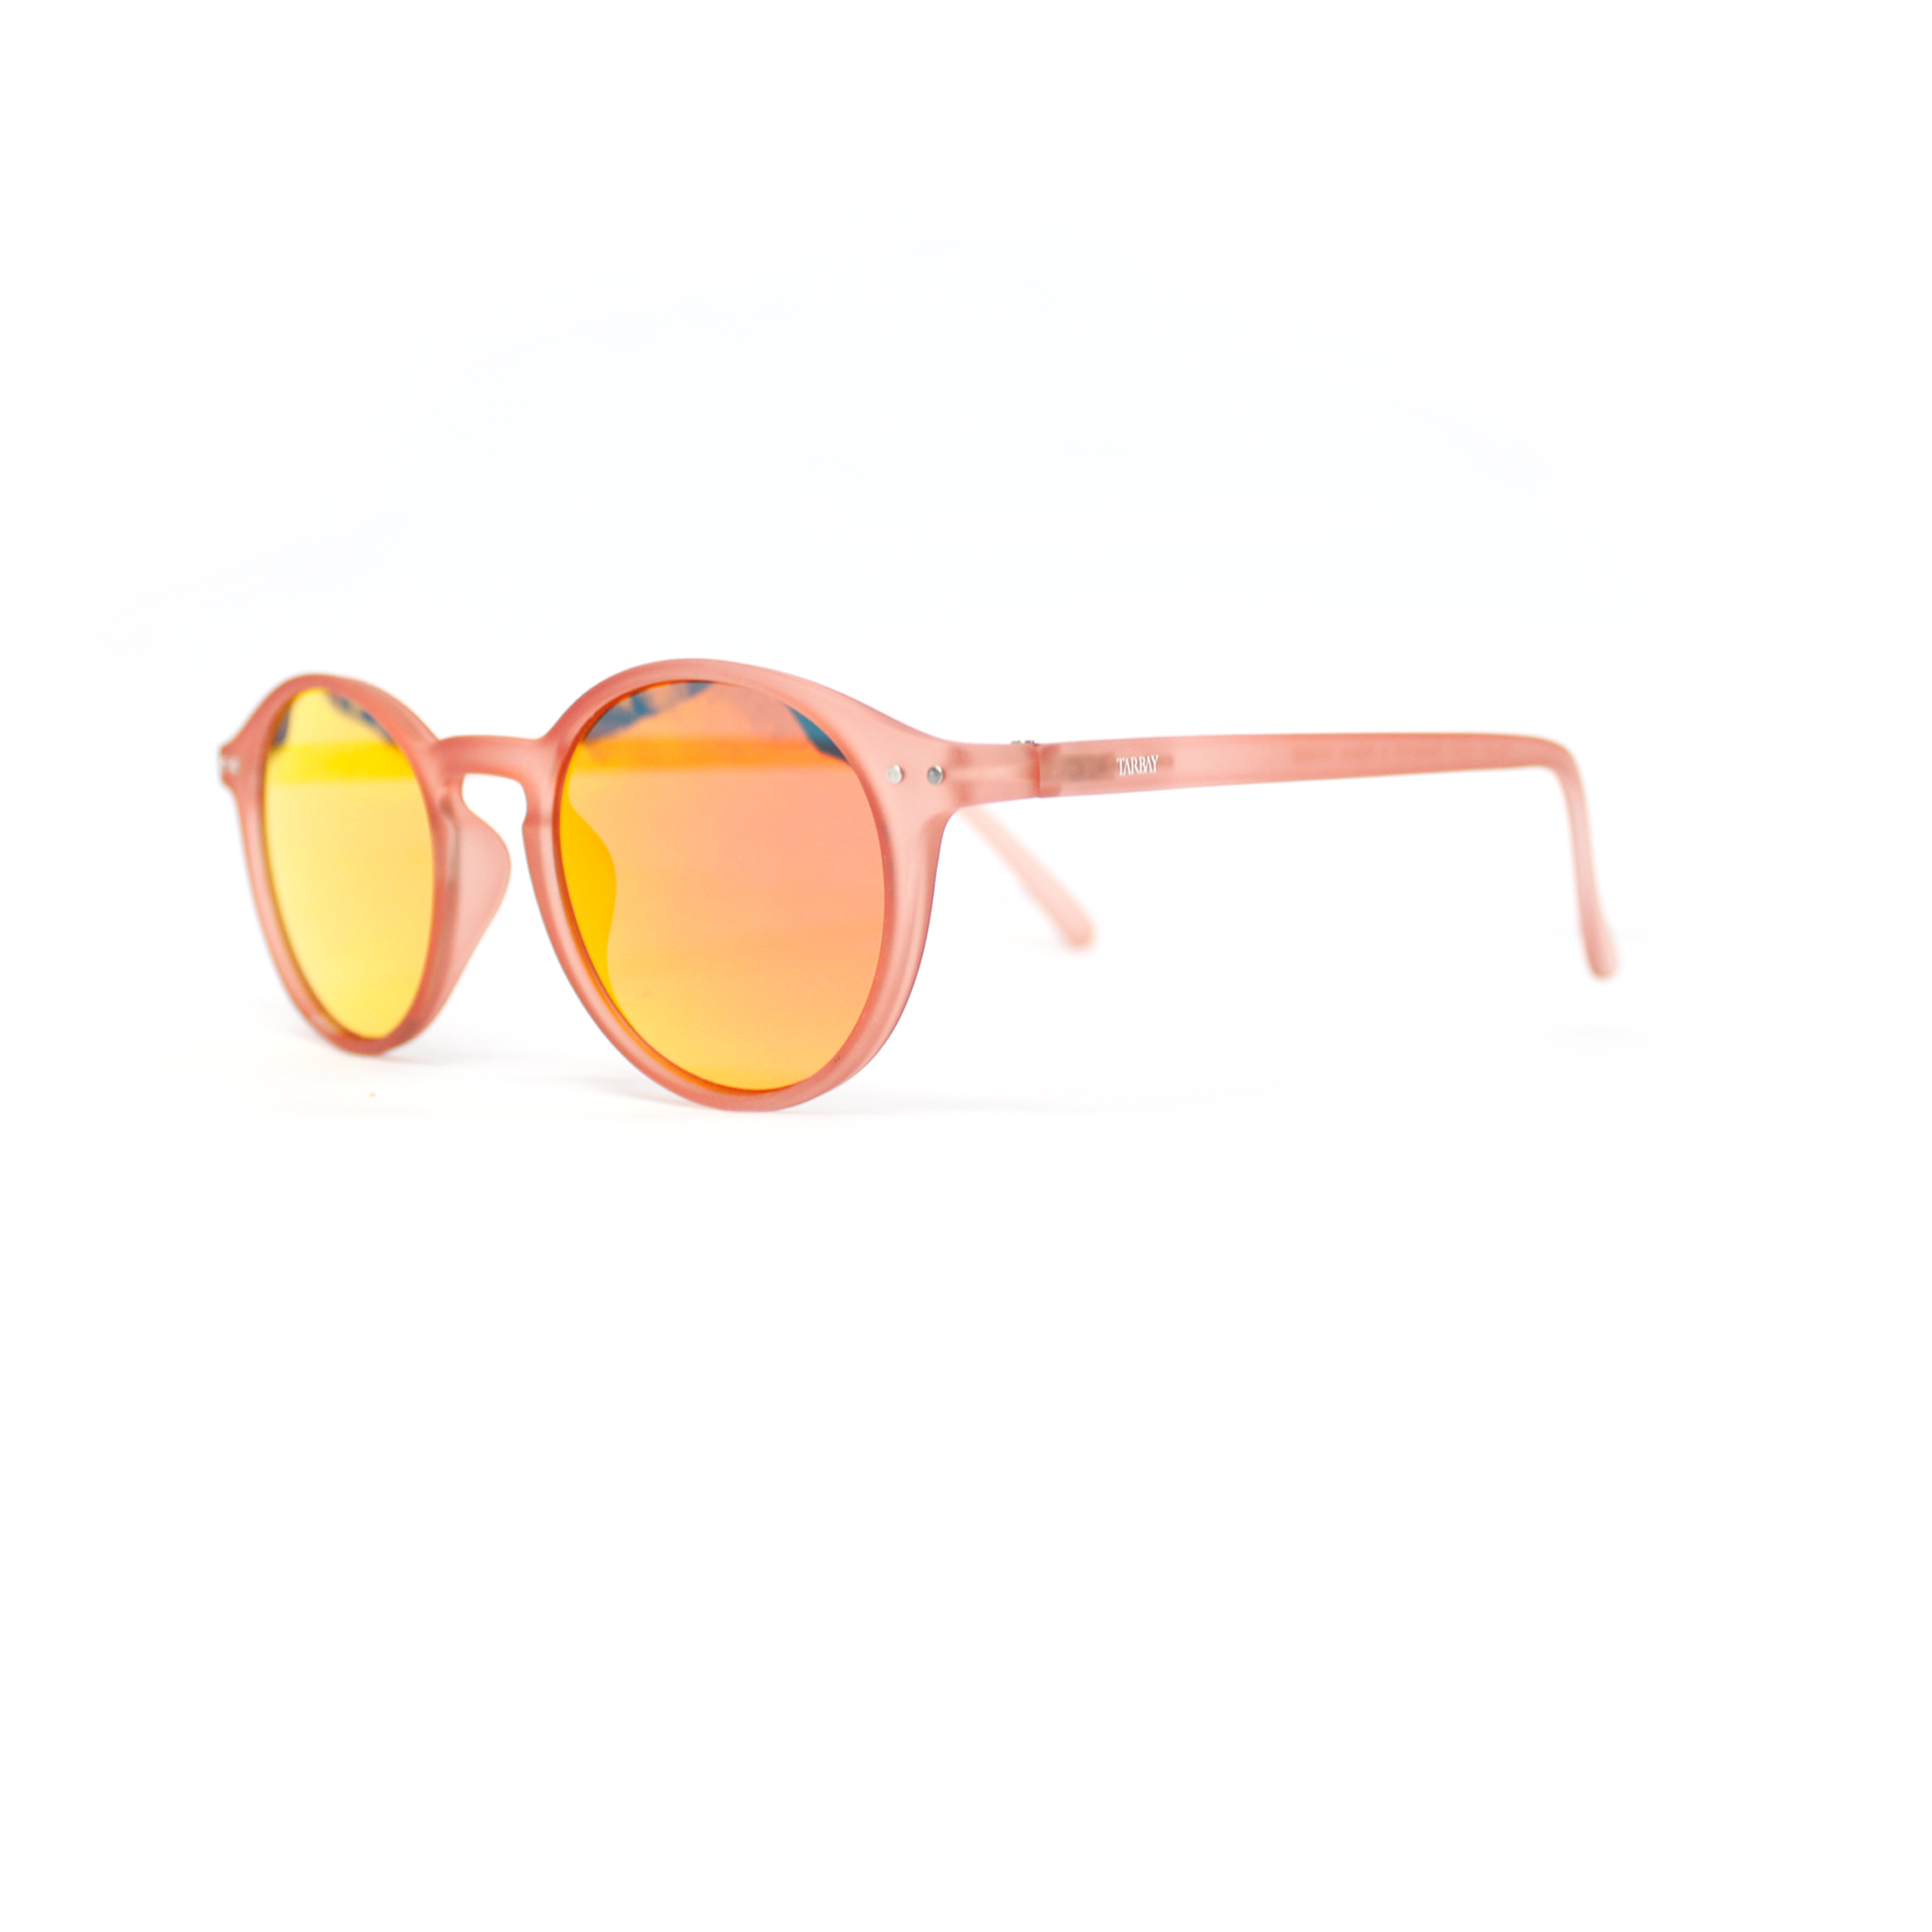 Parasol #2 - Dusty Rose SunGlasses TARBAY   